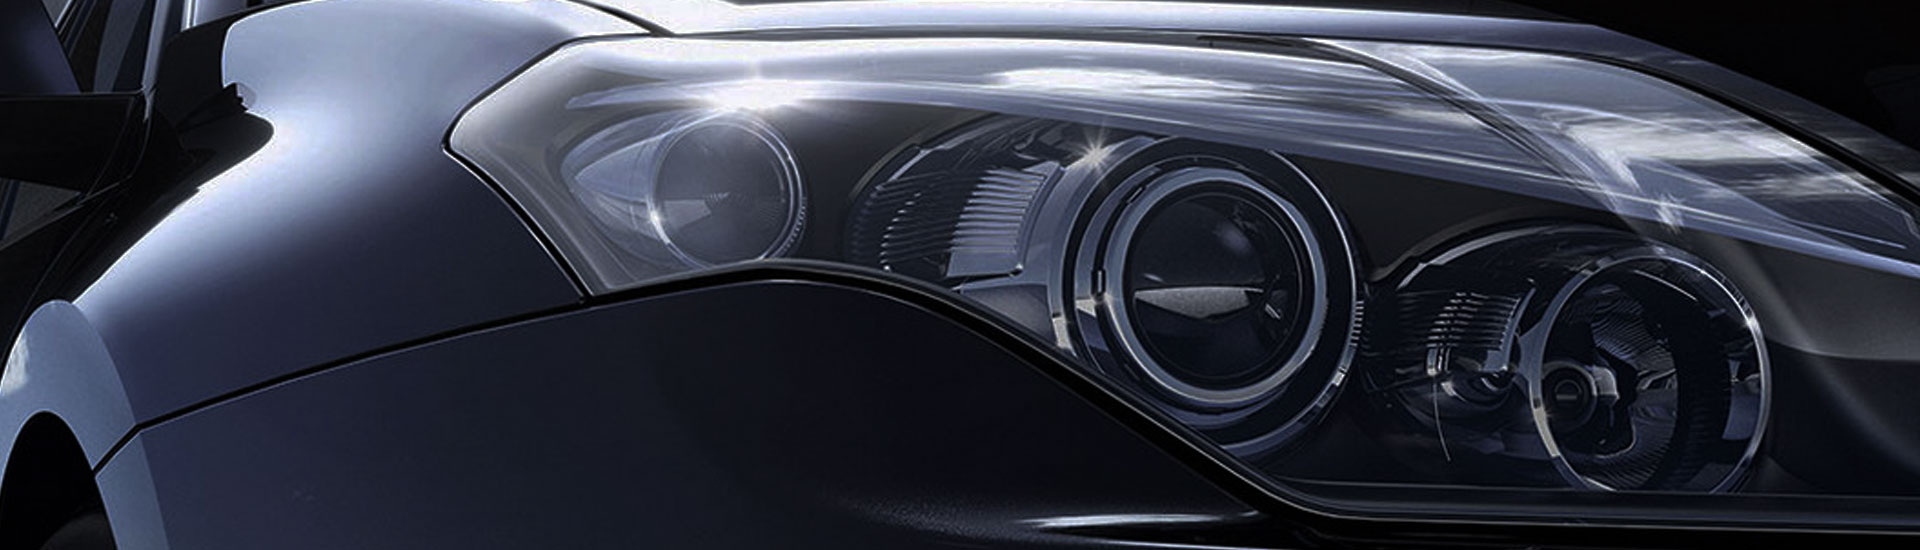 Chrysler Grand Voyager Headlight Tint Covers